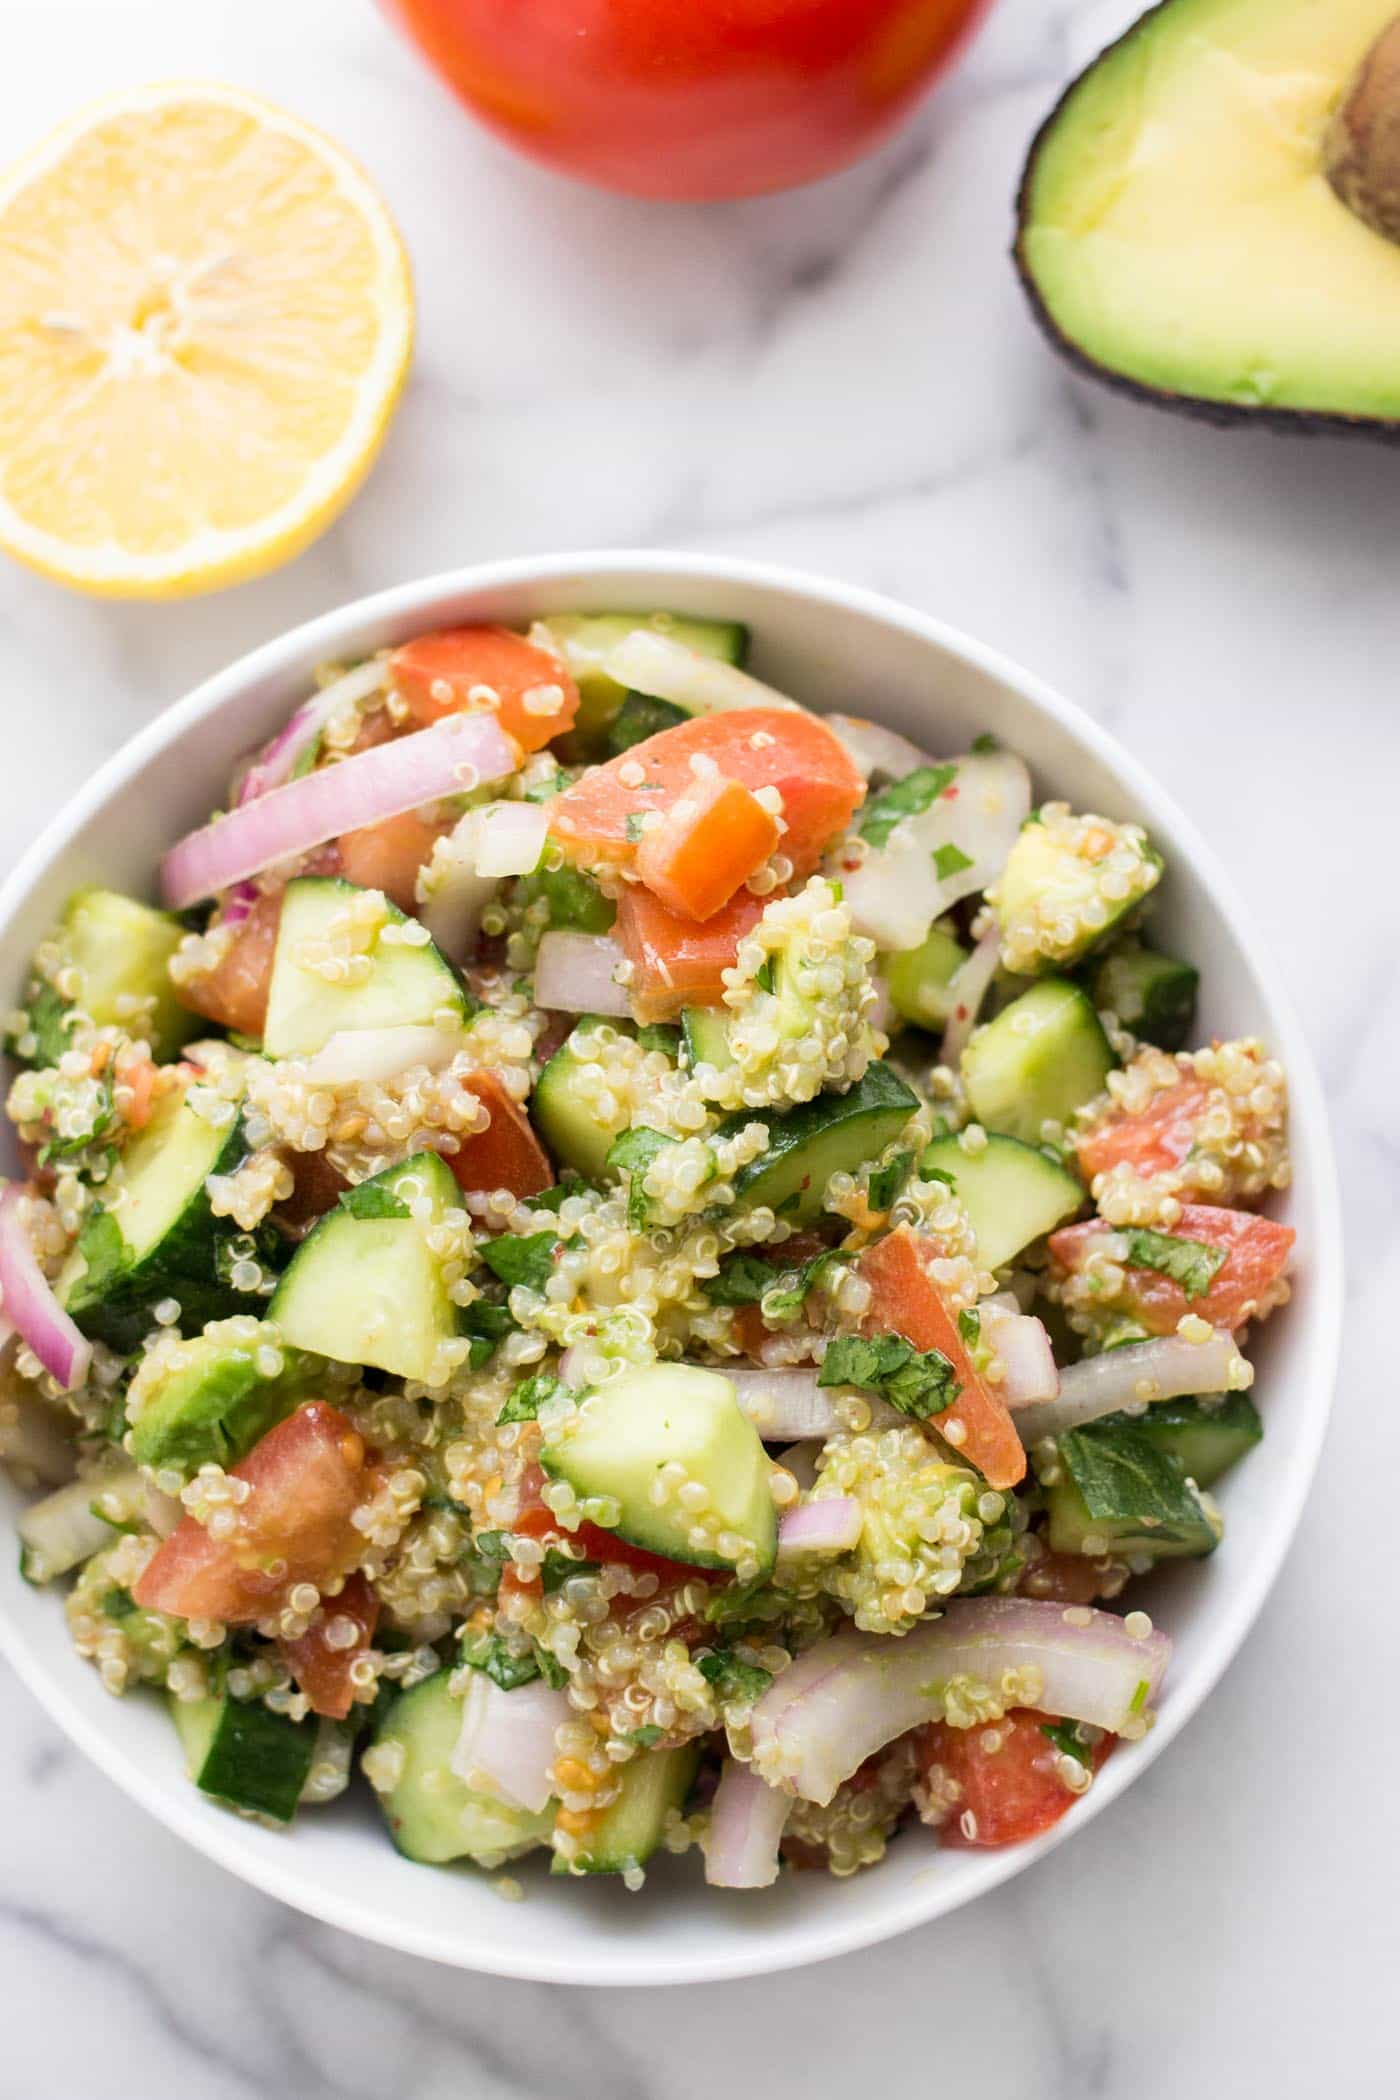 agurk, tomat + Avocado Kvinoa salat-enkel, sund og så flavorful!